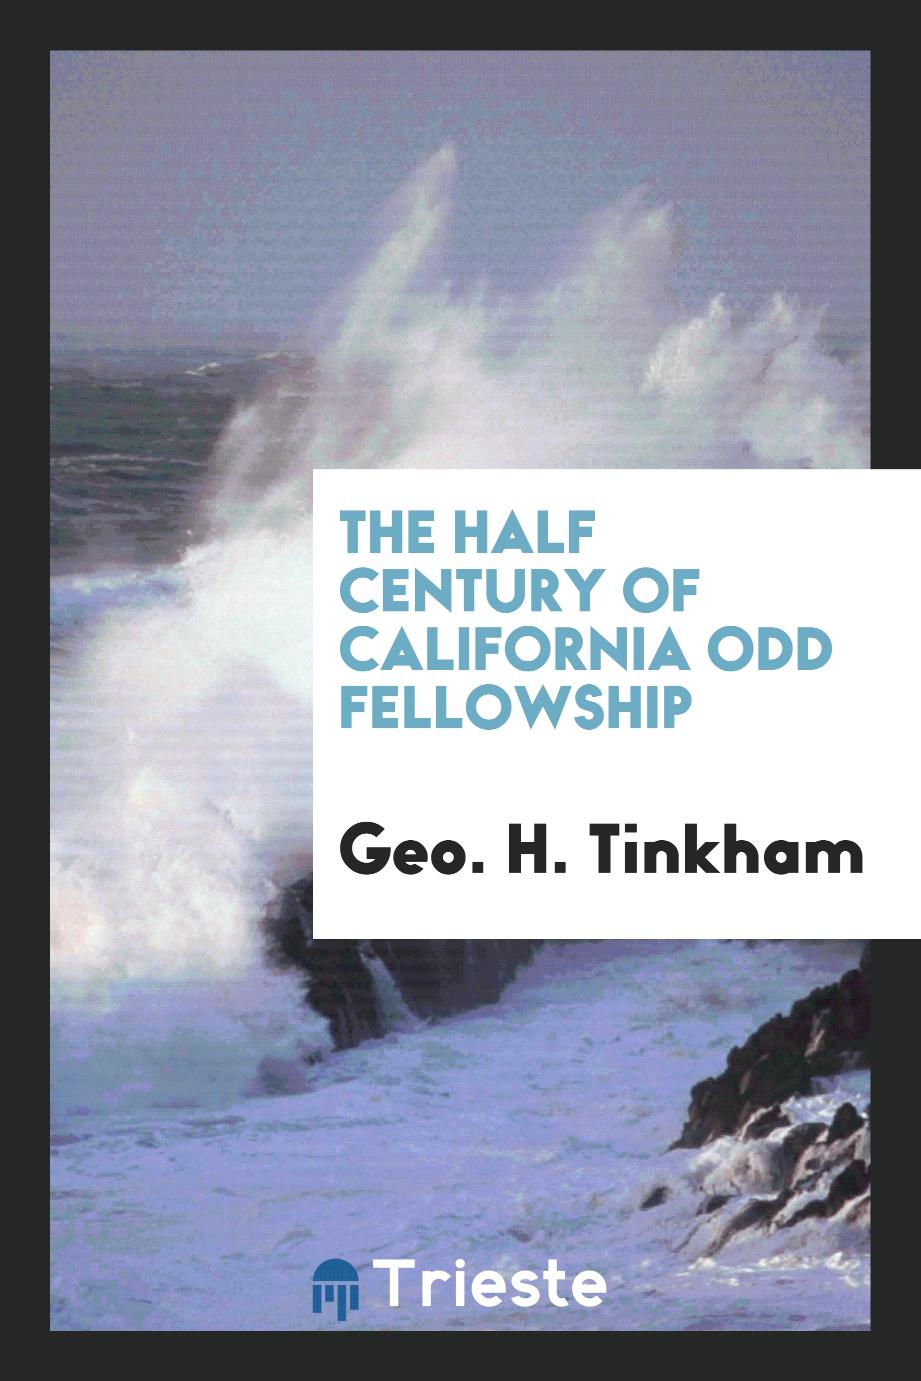 The half century of California Odd fellowship